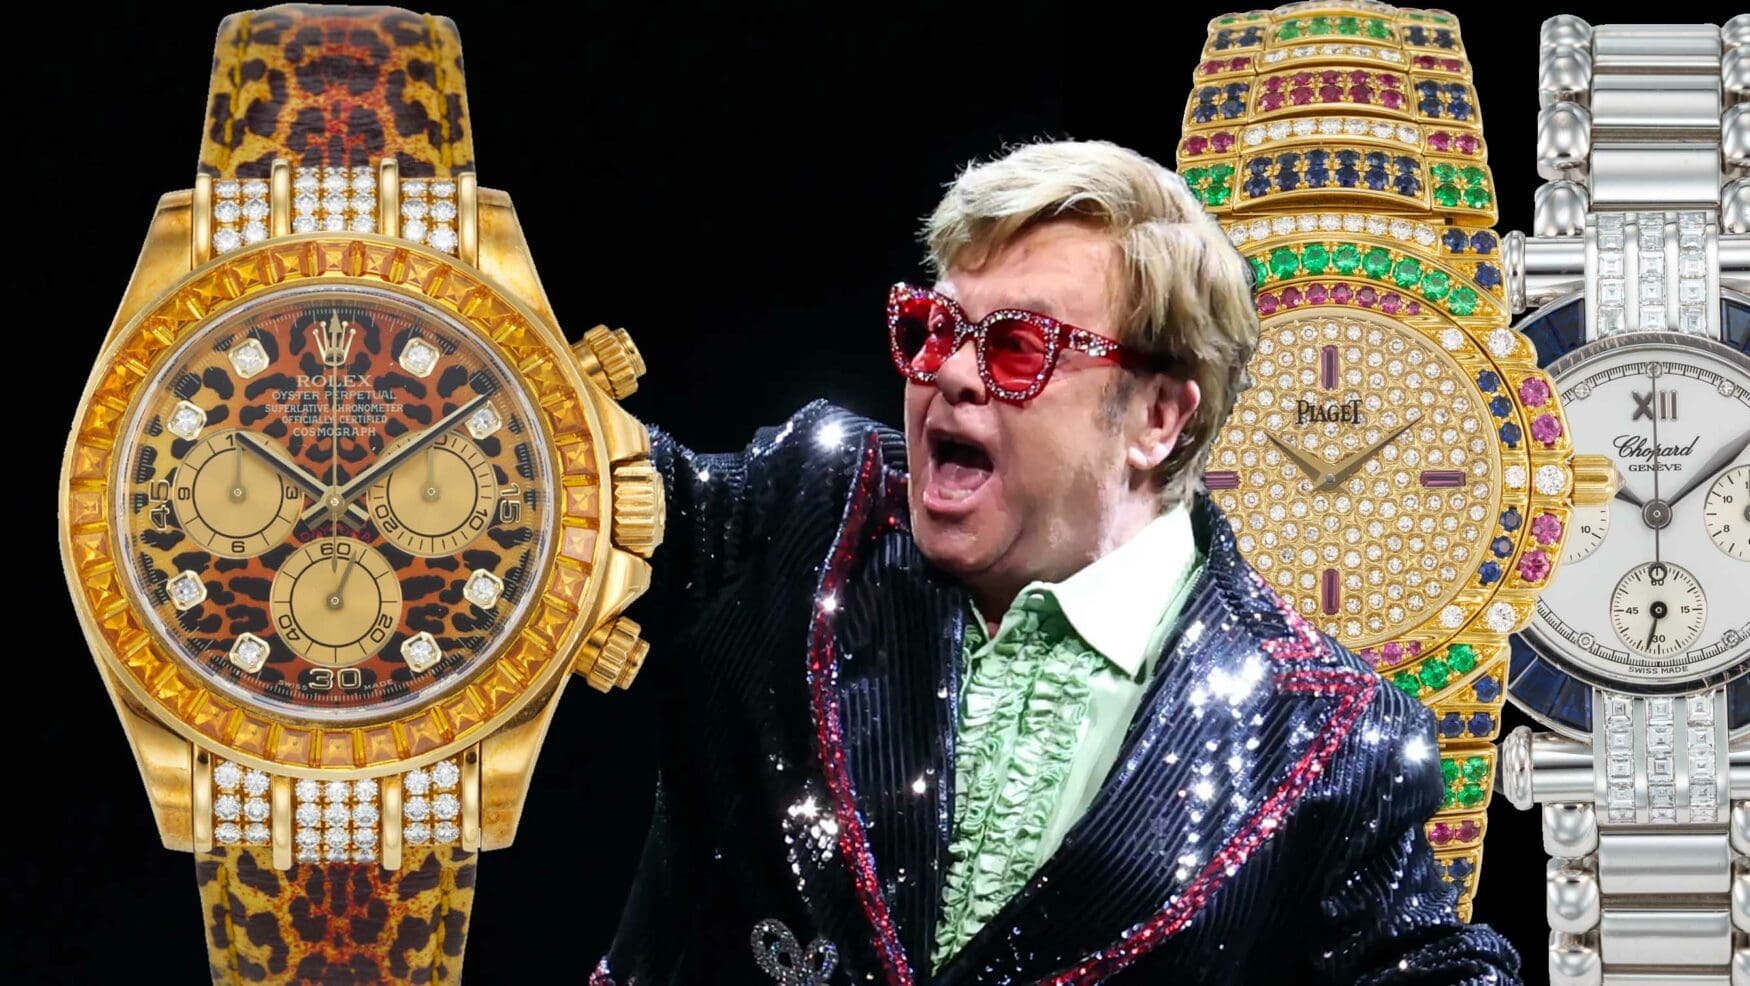 The highlights of Elton John’s Christie’s auction